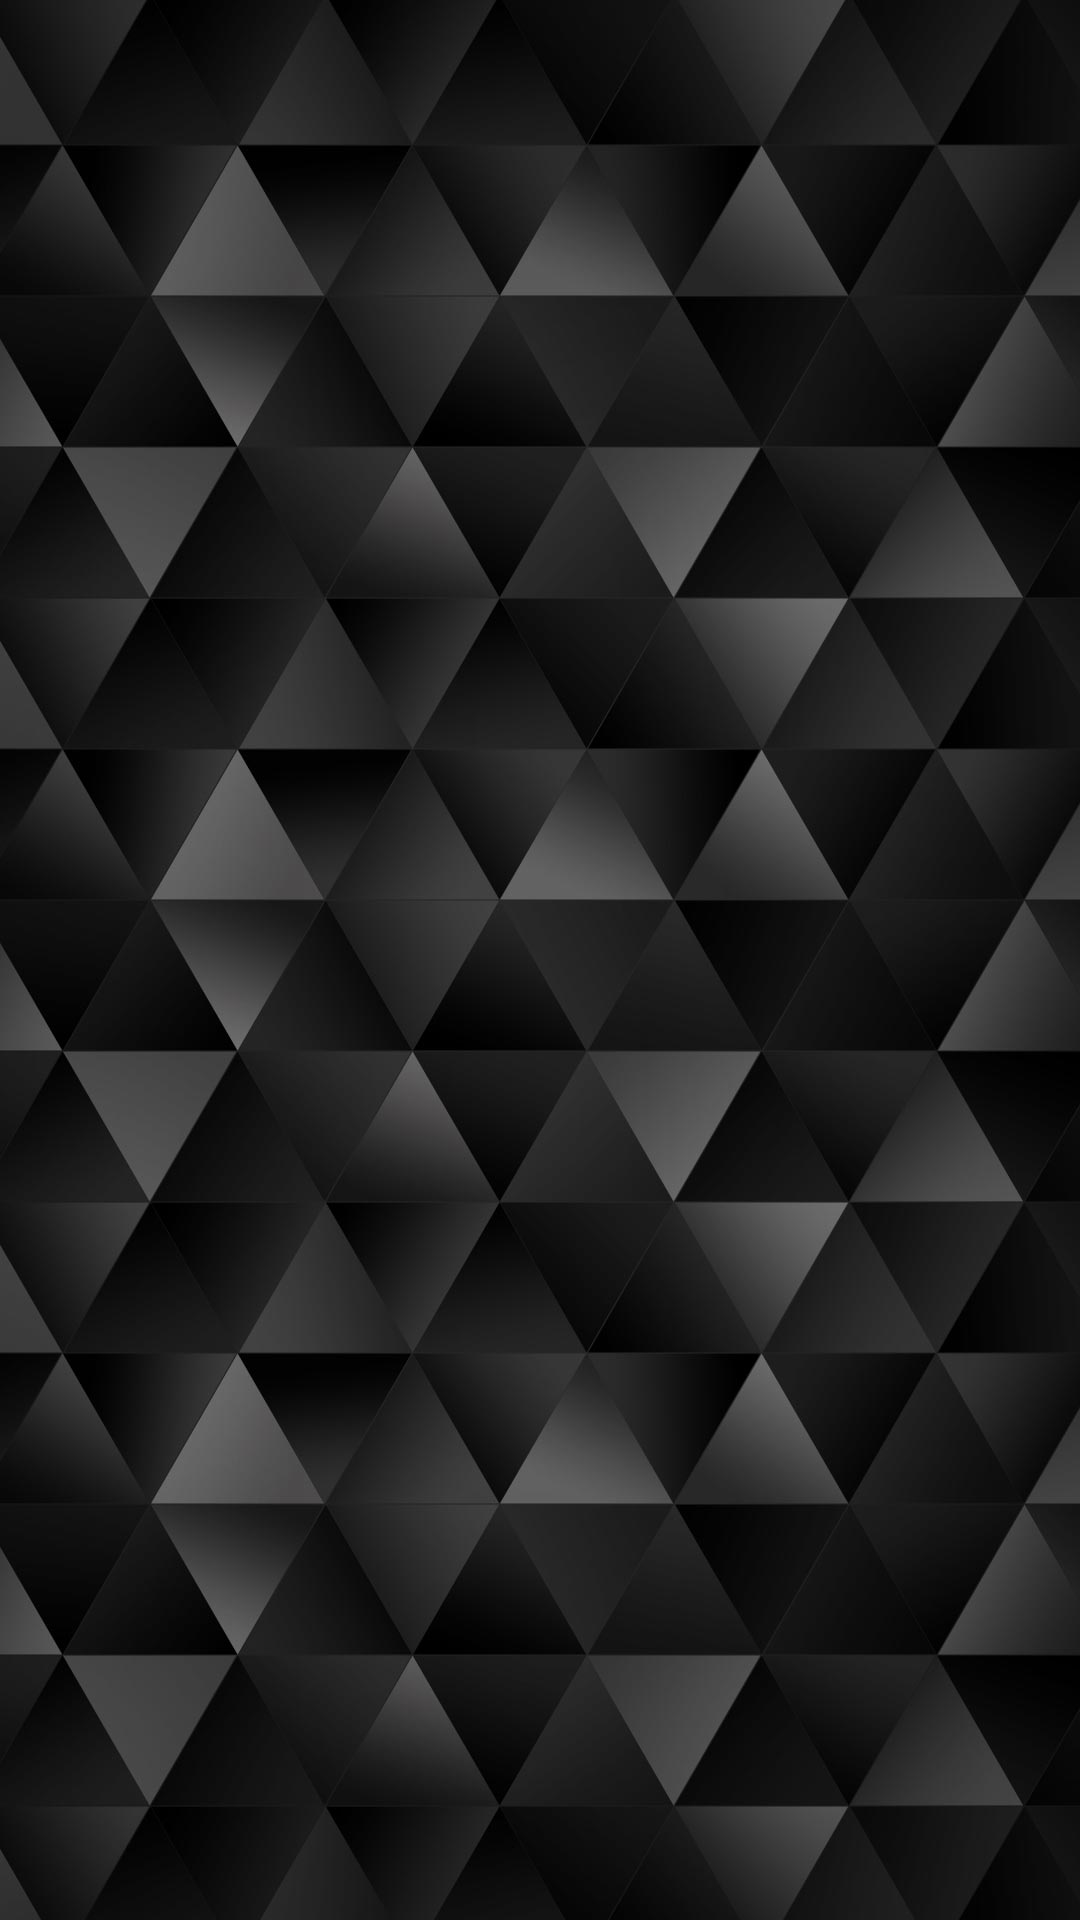 Black Geometric Background Images  Free Download on Freepik